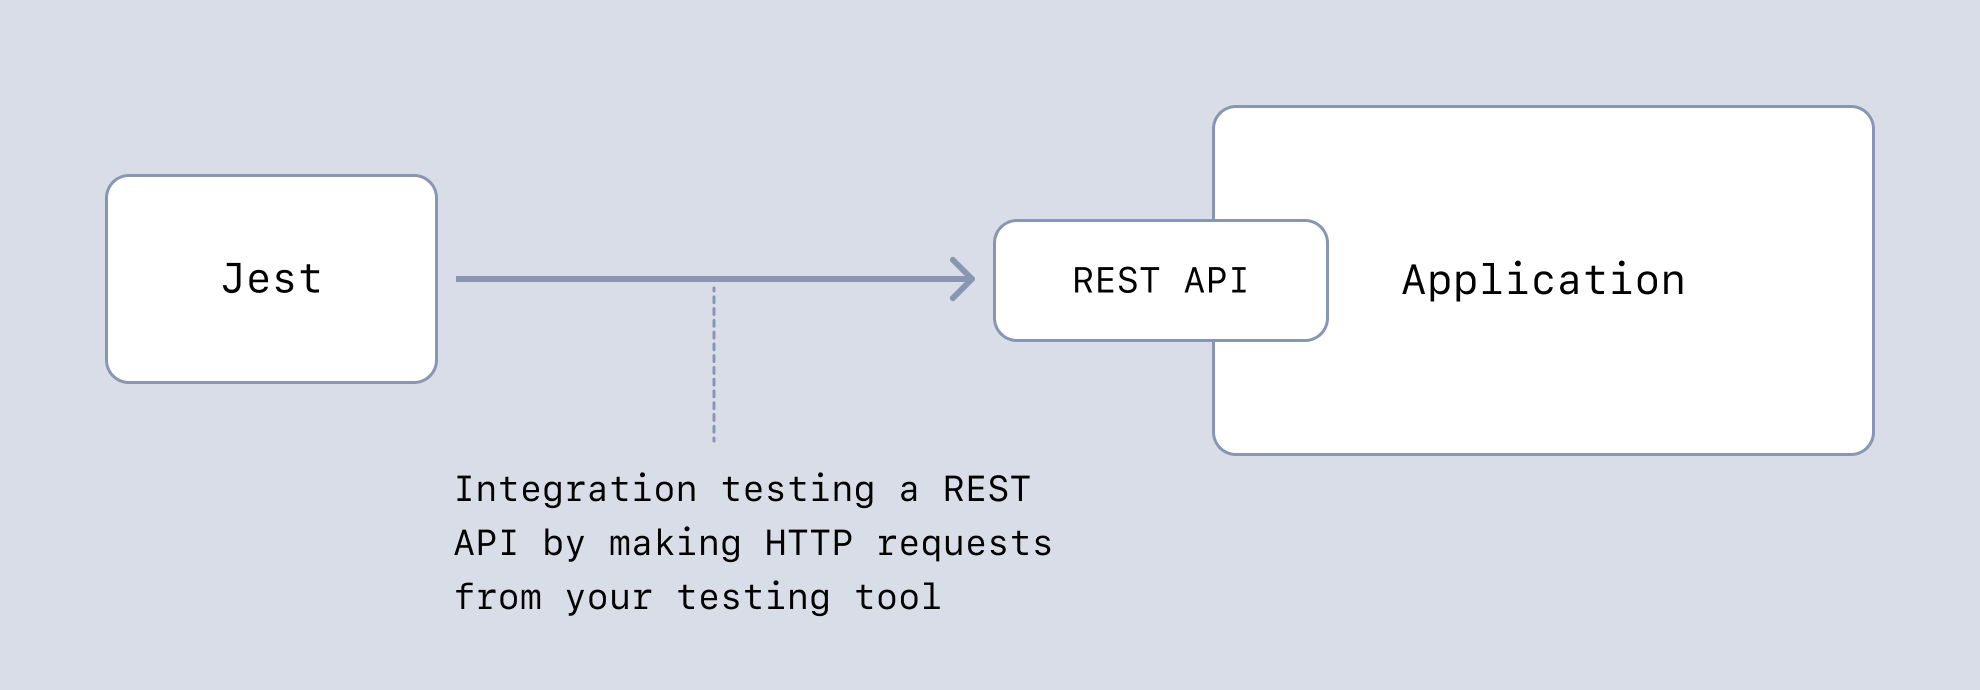 Integration testing REST APIs